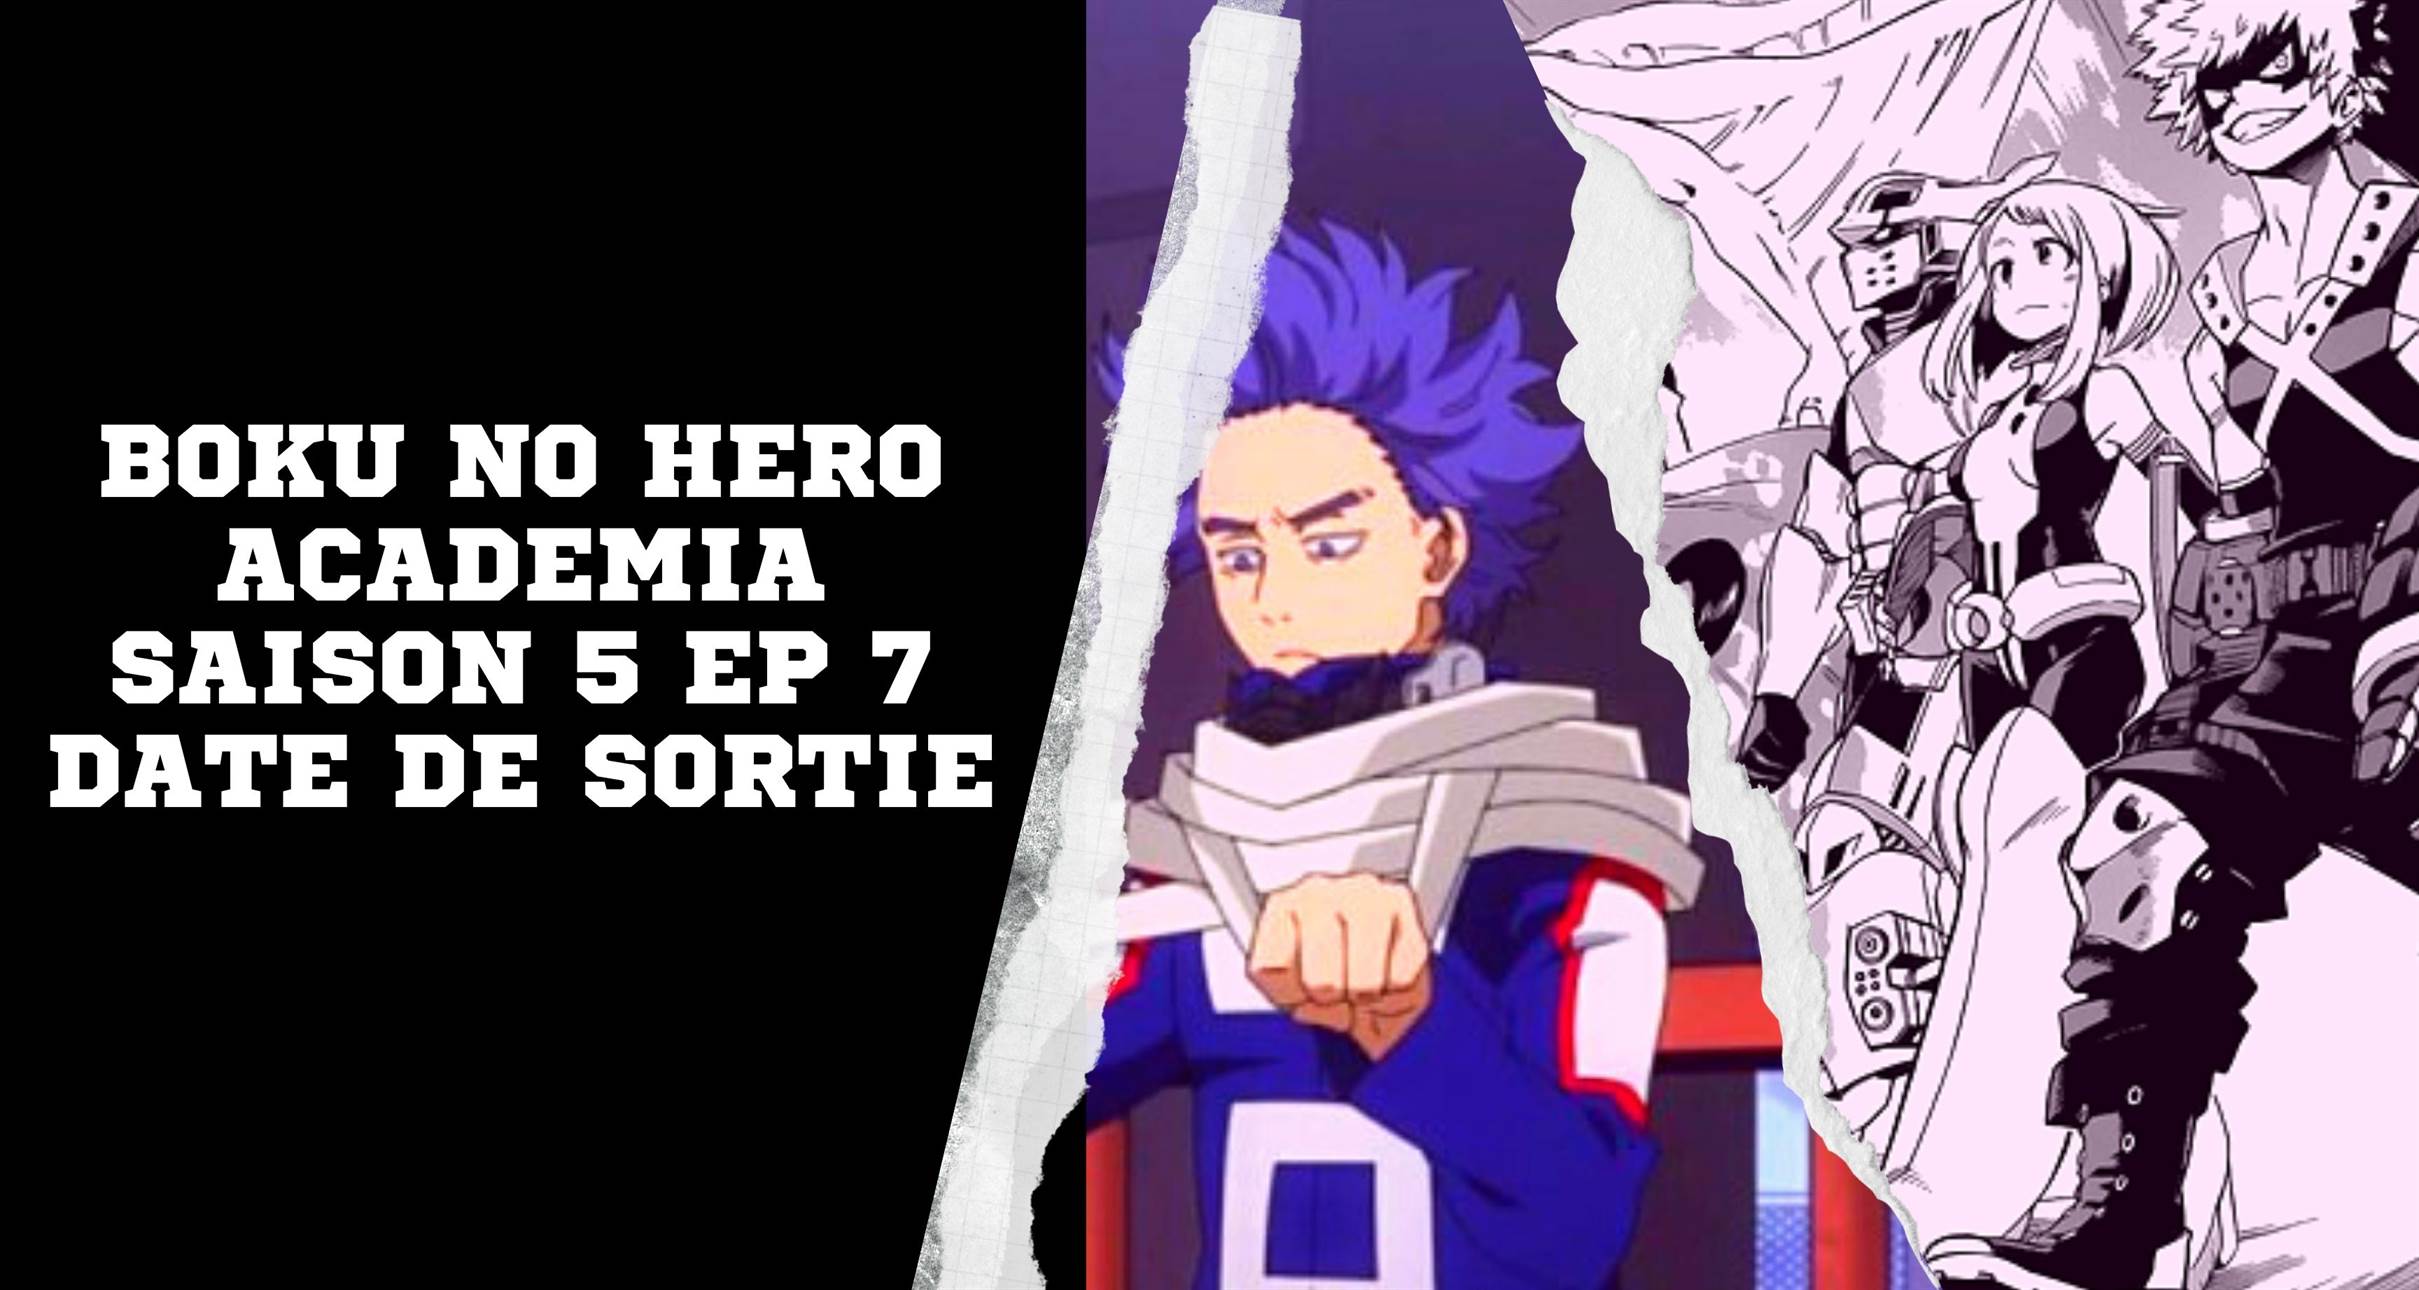 Boku No Hero Academia saison 5 EP 7